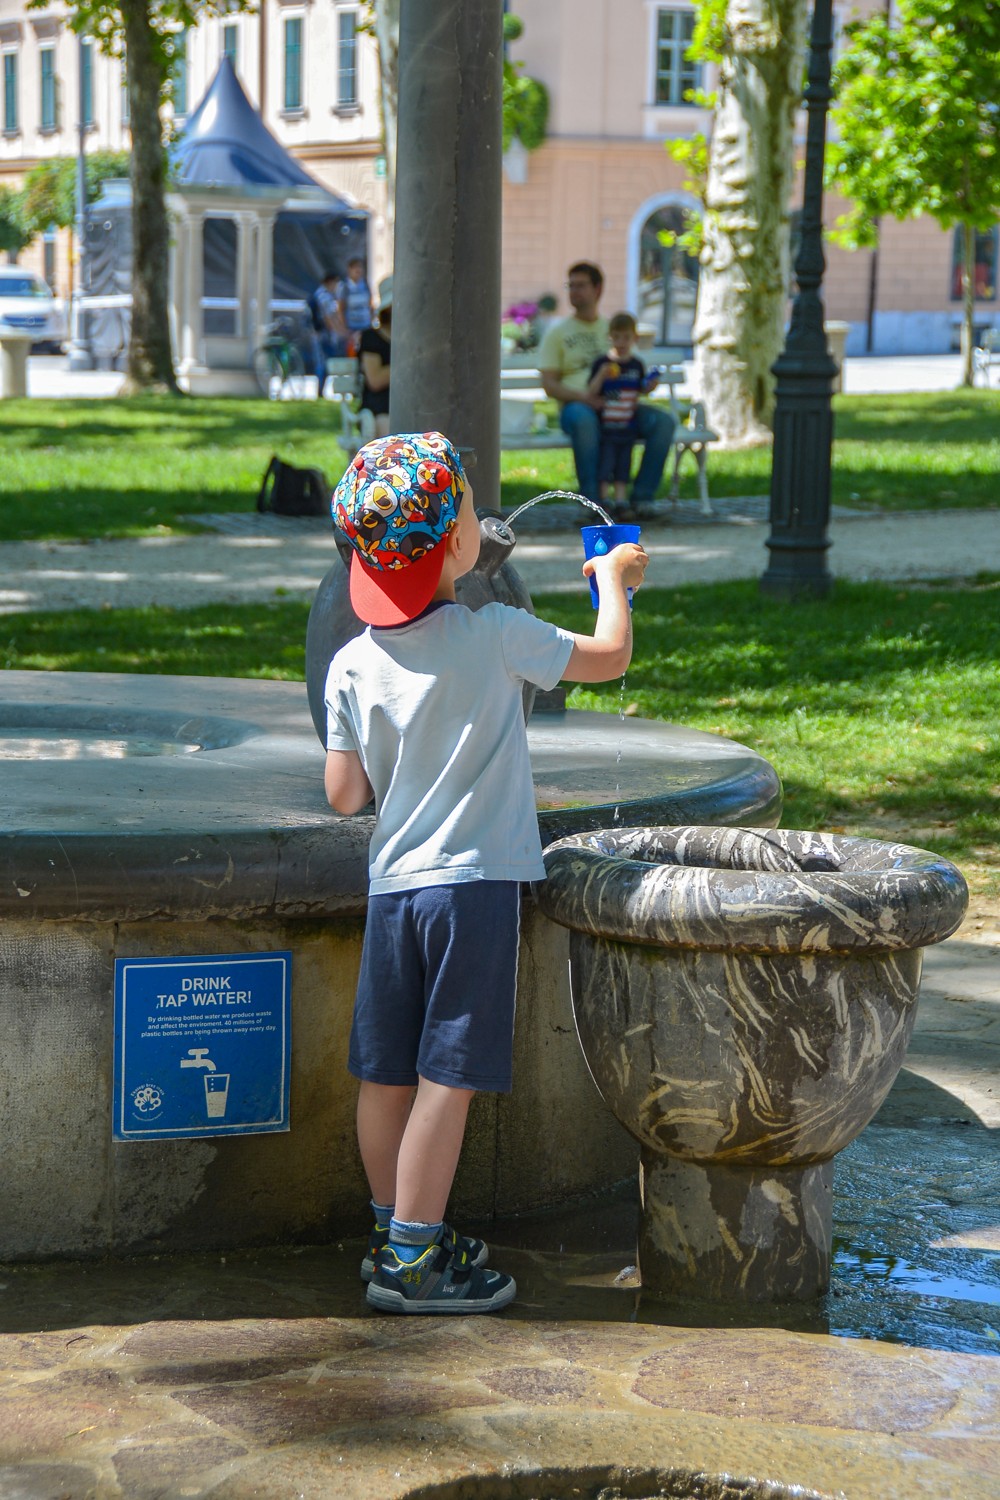 A boy drinks water from a public water tap in Ljubljana (Photo credit: The visit Ljubljana website)